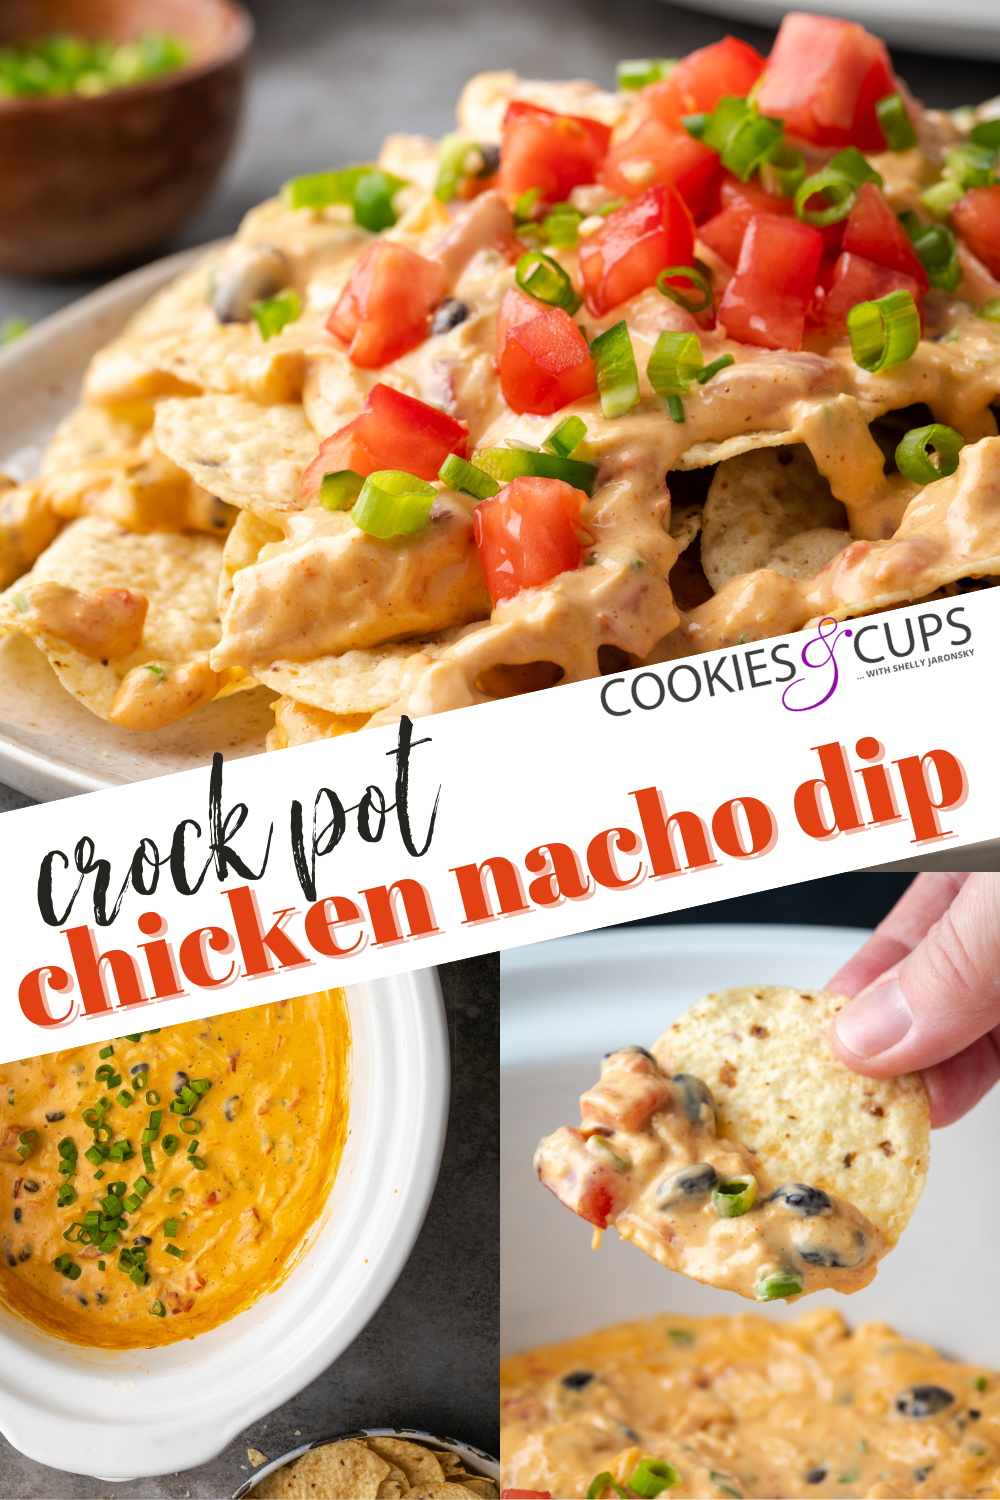 Titulný obrázok Crock Pot Chicken Nacho Dip na Pintereste.